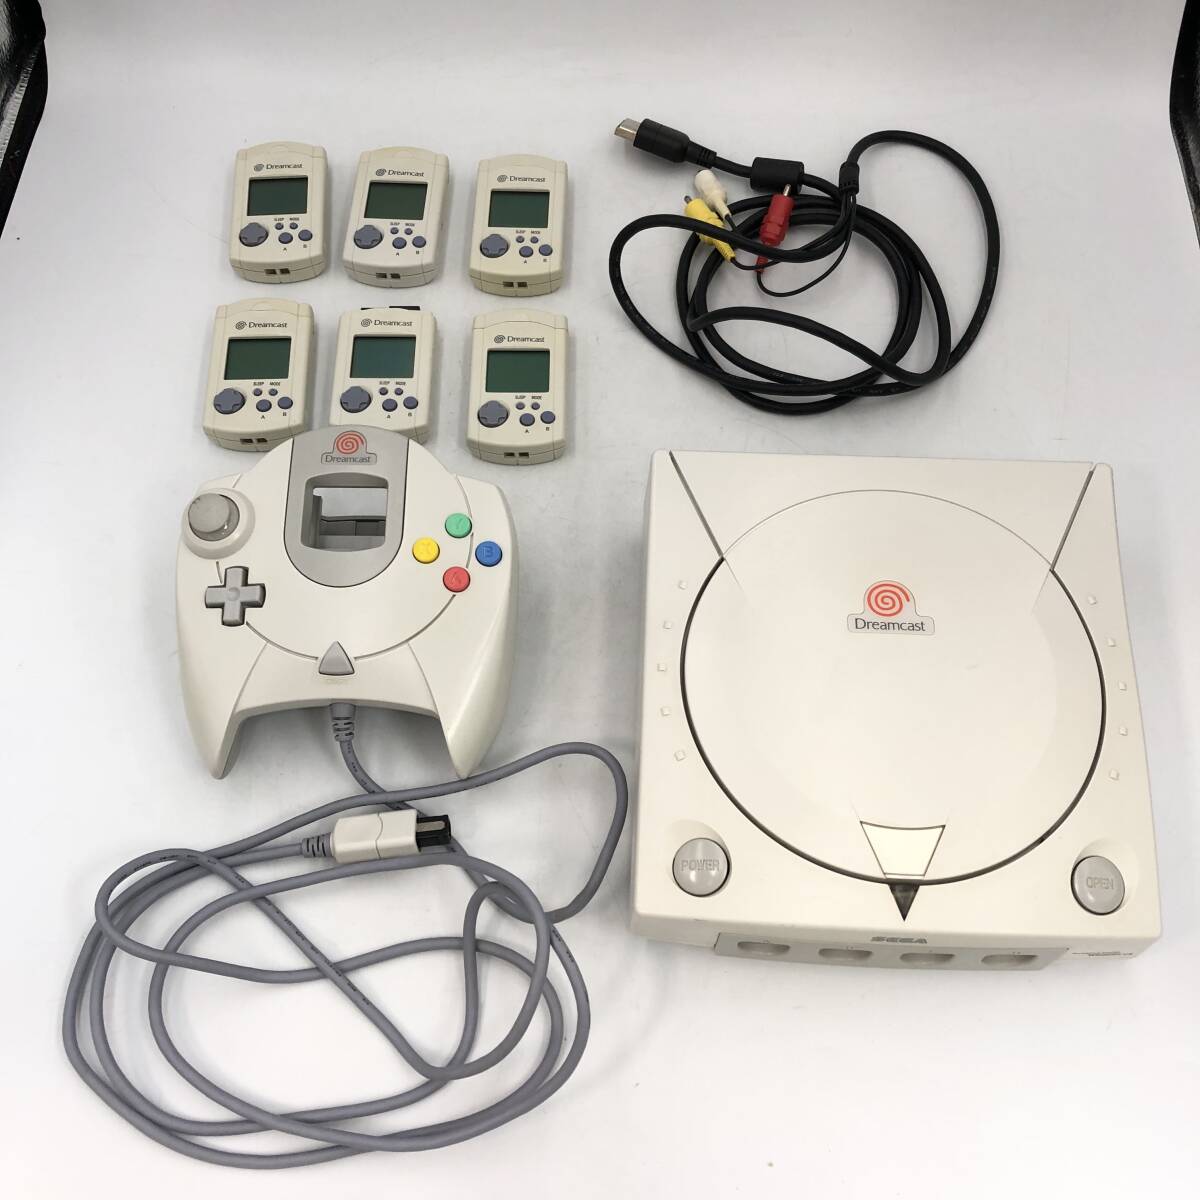 HKT-7100 [Dreamcast] Dream Cast Sega Sega Visual Memory Game Machine Controller HKT-7700